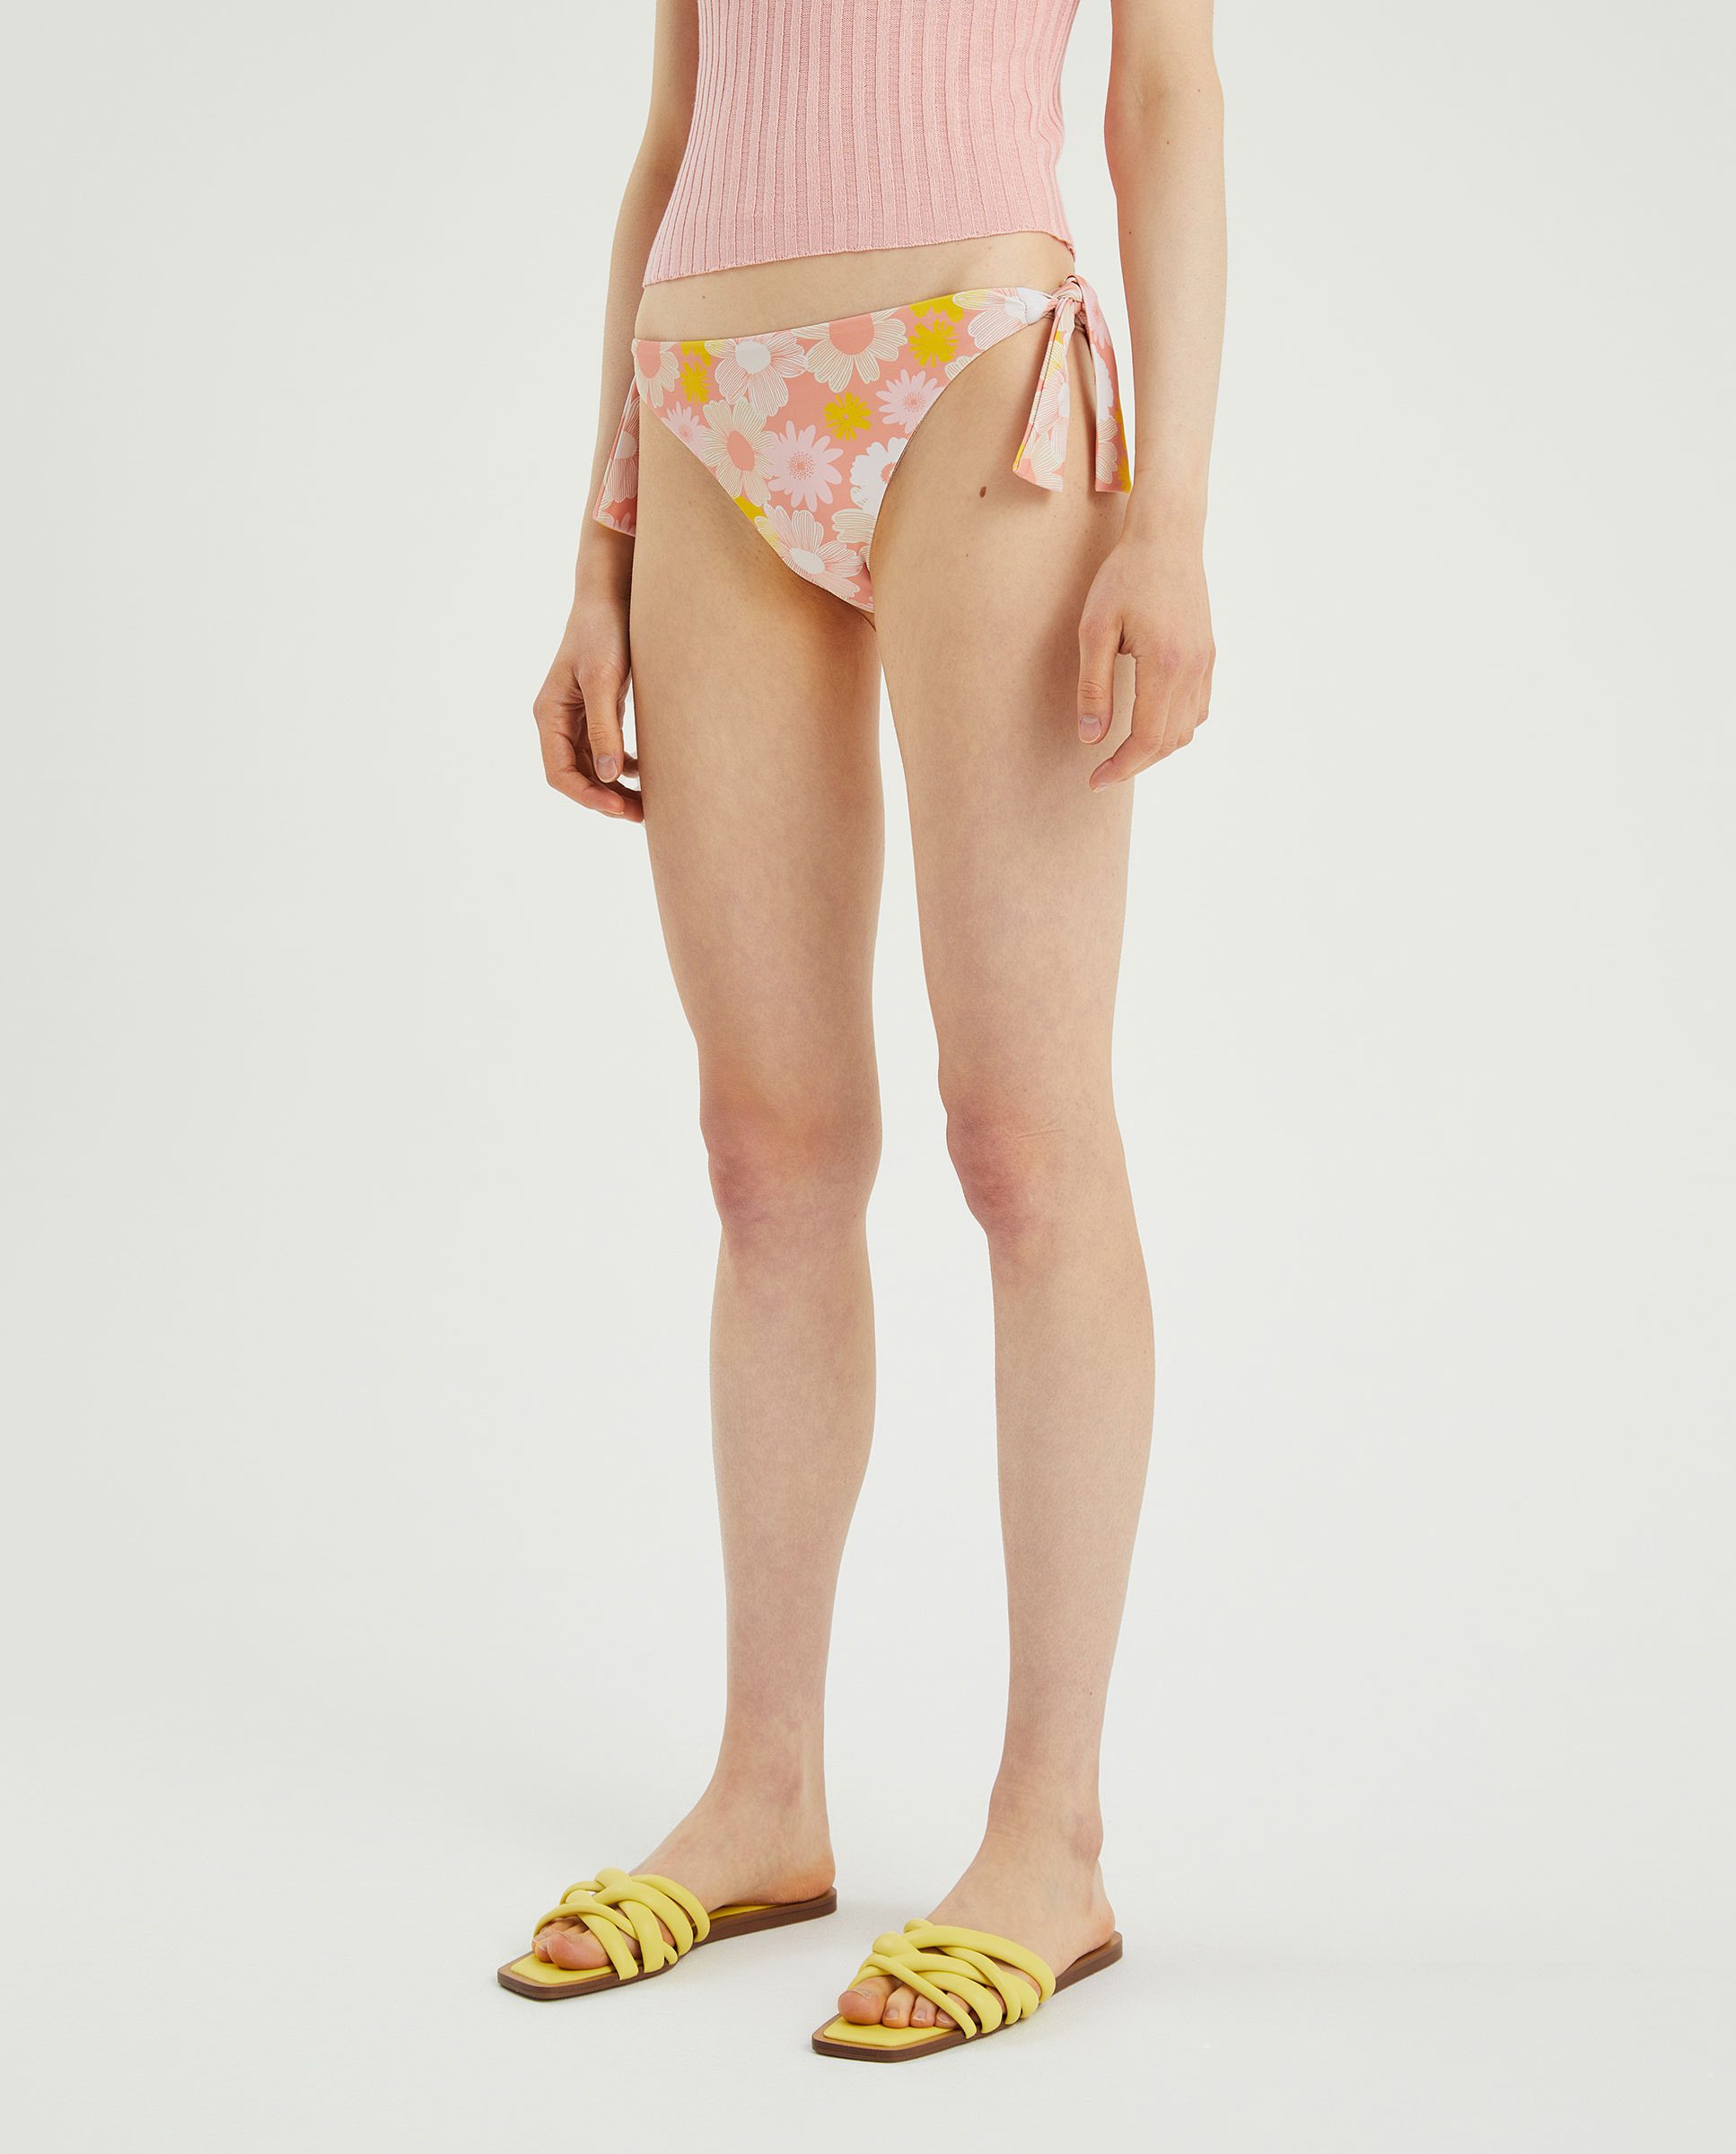 Bikini Bottom Μαγιό Με Ροζ Φλοράλ Σχέδιο Compania Fantastica